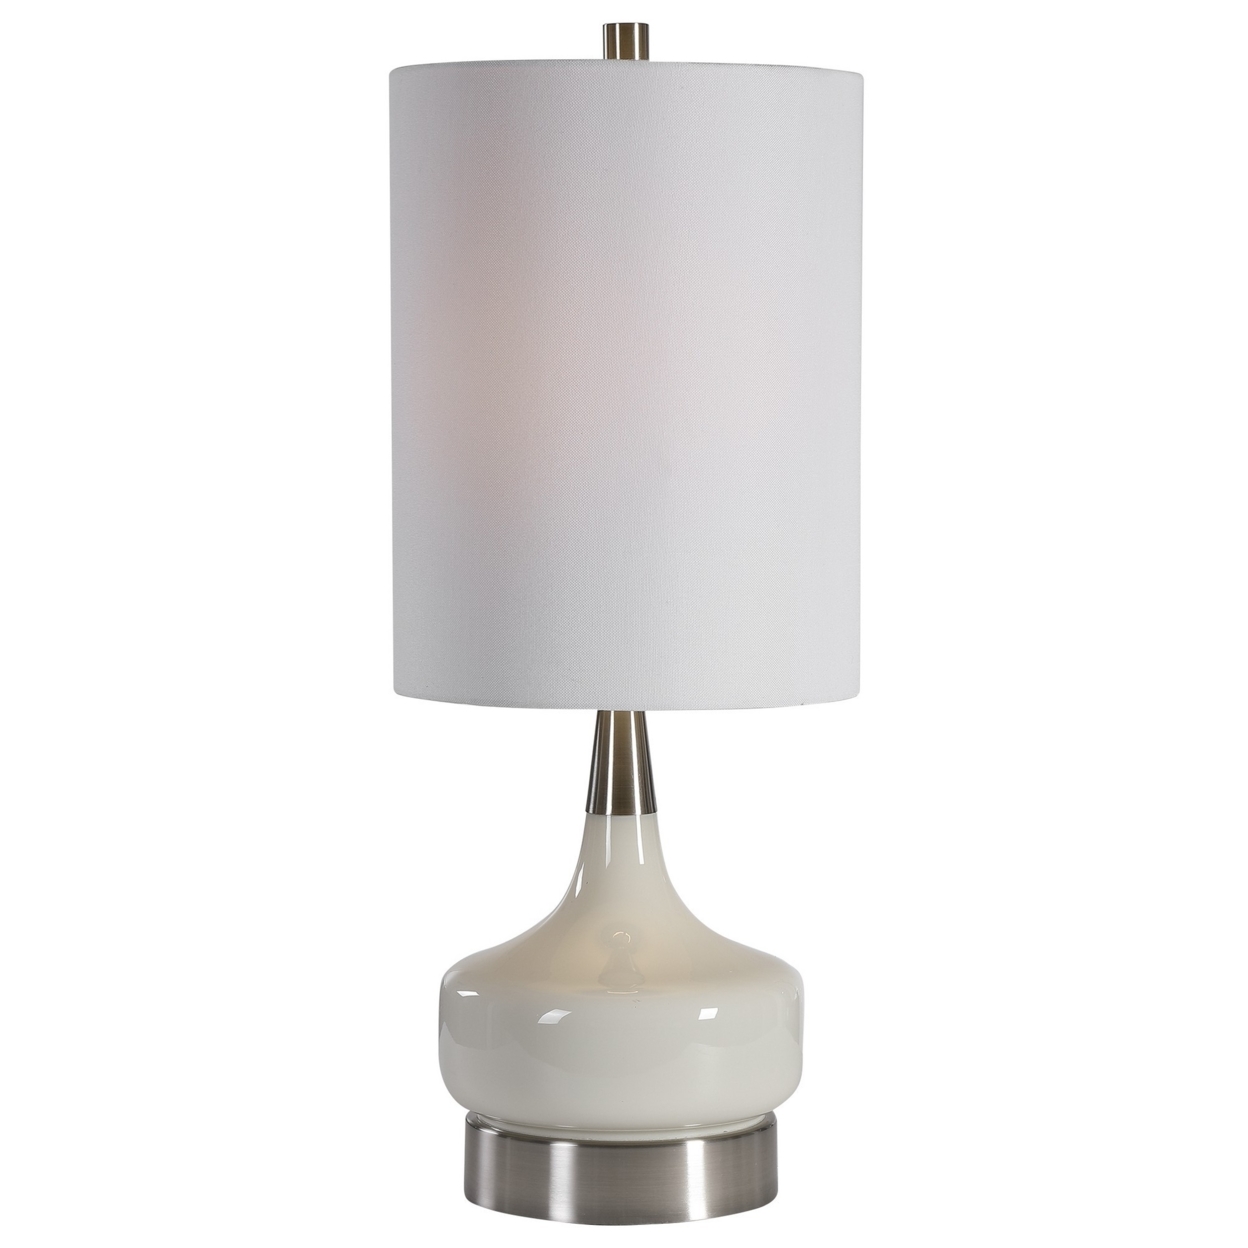 Pot Bellied Shape Glass Table Lamp with 3 Way Switch, White- Saltoro Sherpi